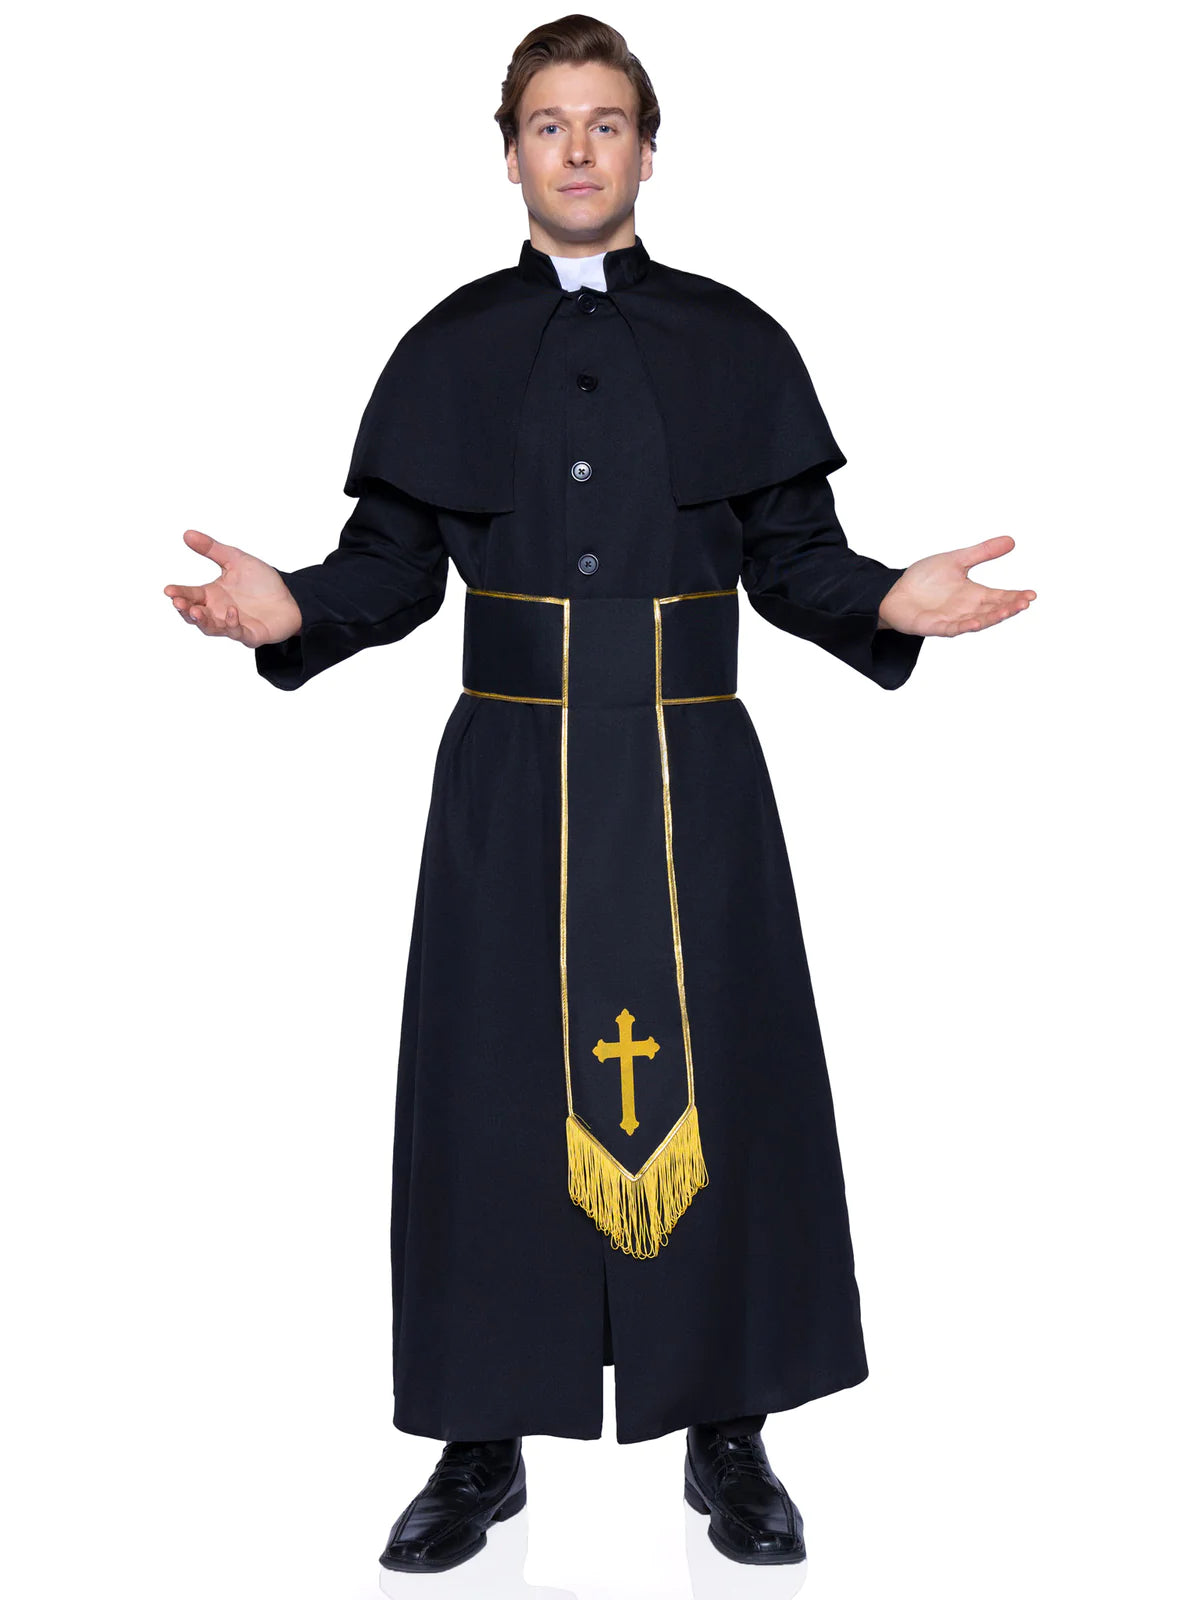 Priest Robe Adult Costume